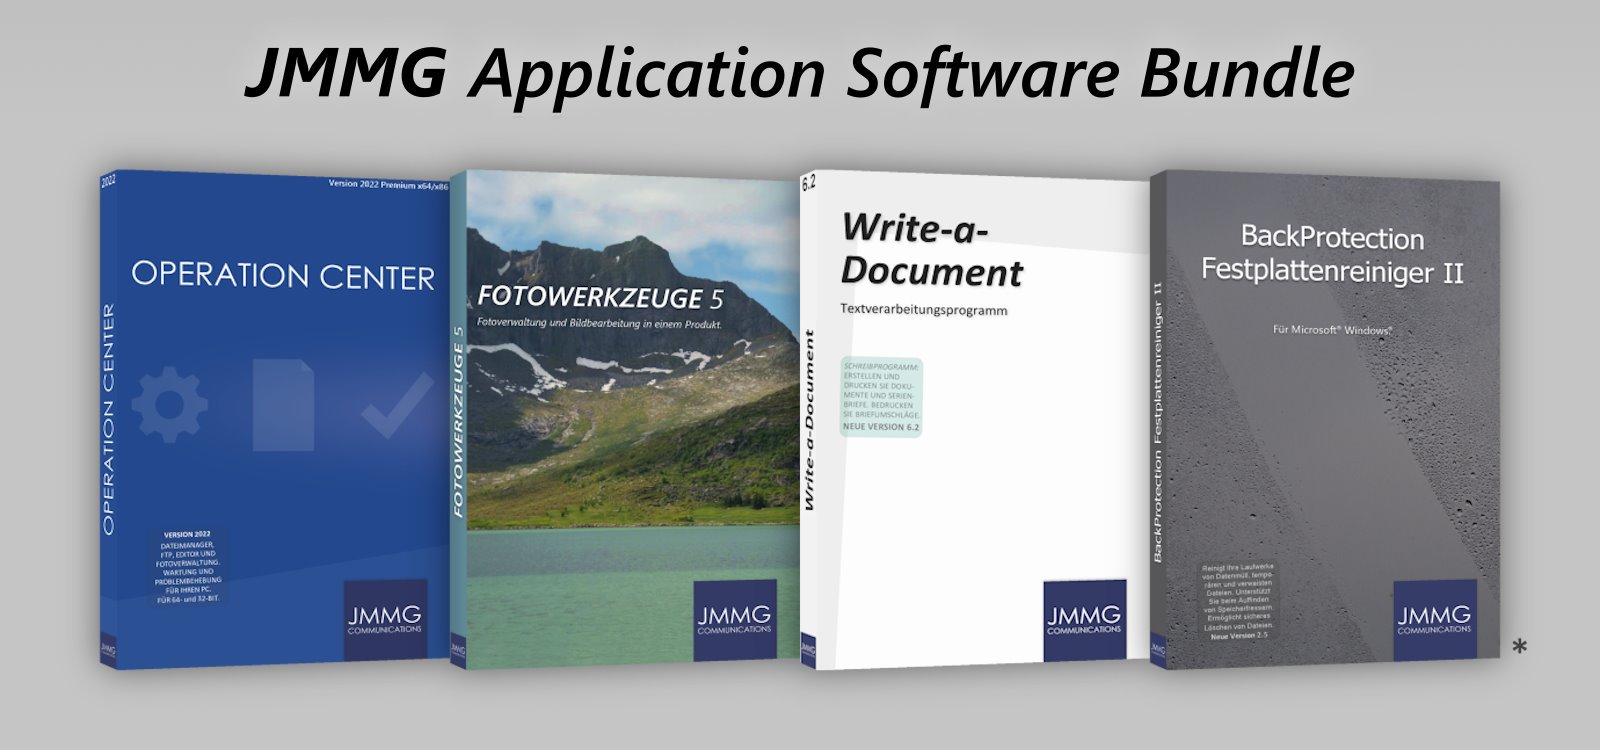 JMMG Application Software Bundle